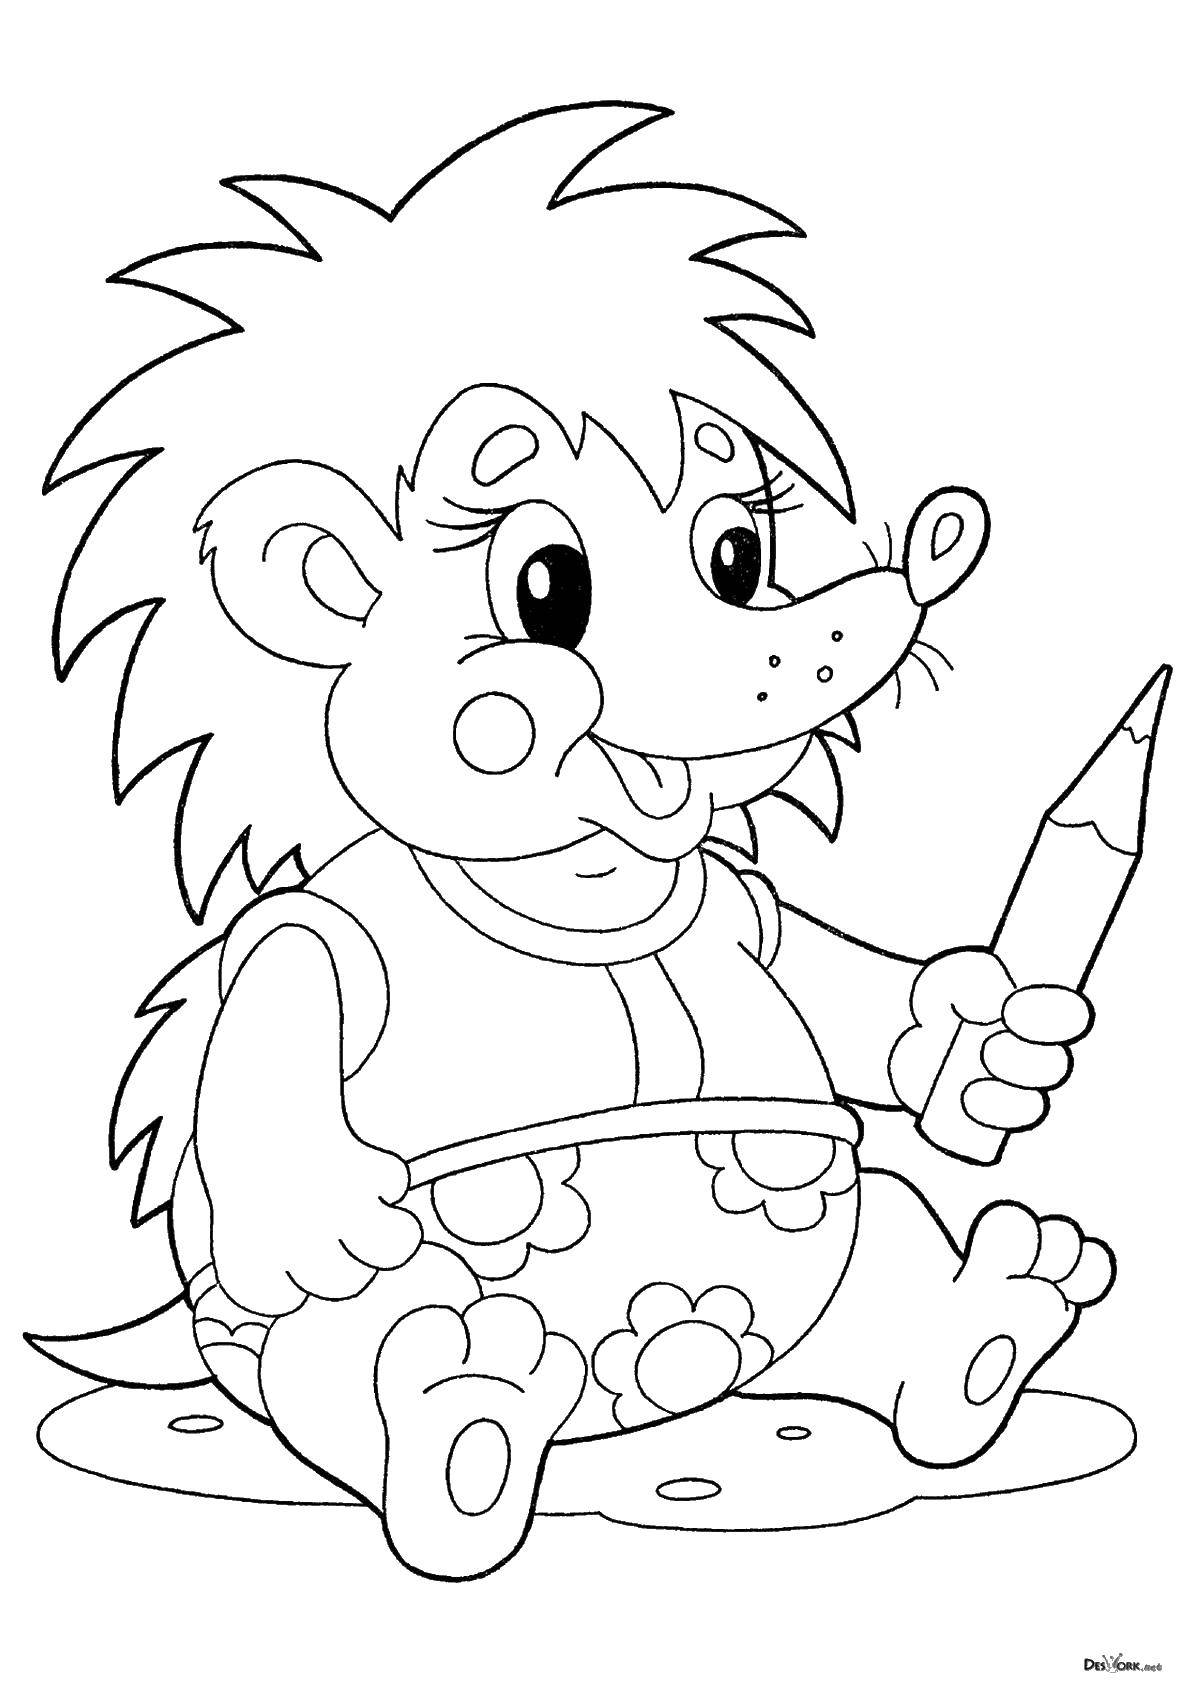 Coloring Hedgehog pencil. Category pencil. Tags:  hedgehog, pencil.